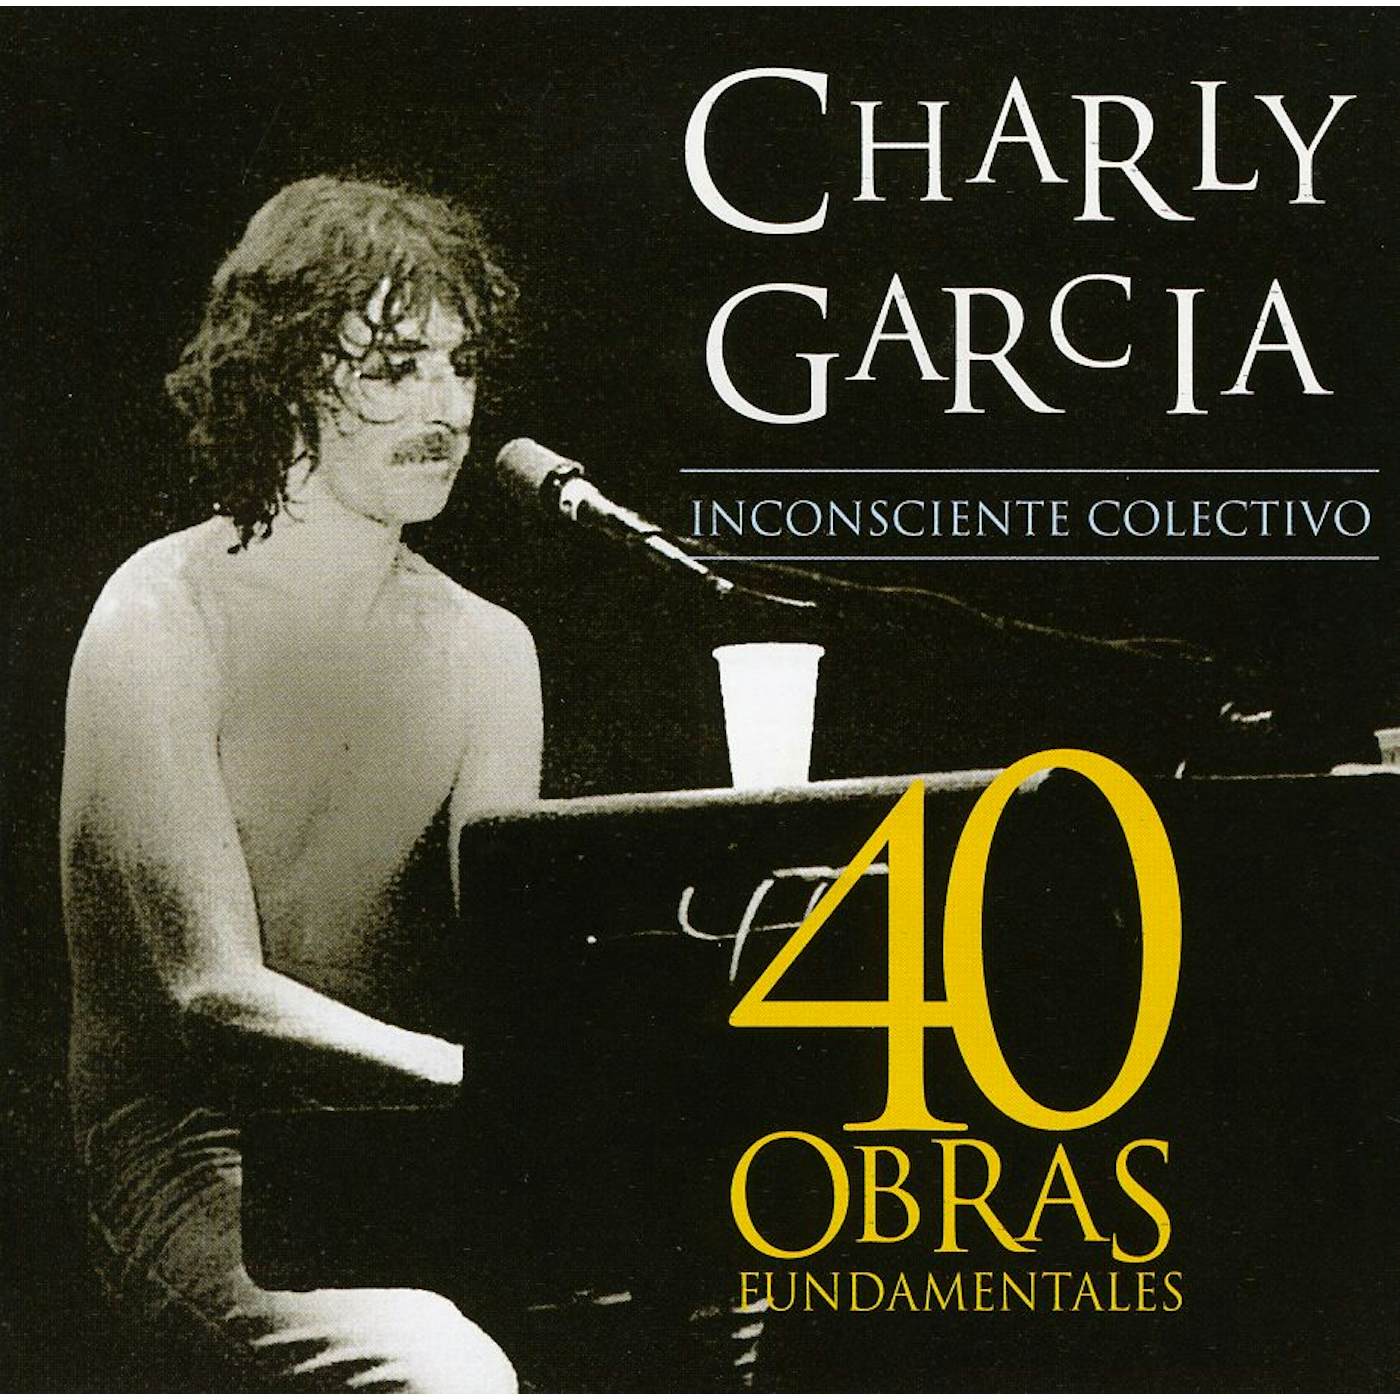 Charly Garcia Pena 40 OBRAS FUNDAMENTALES CD